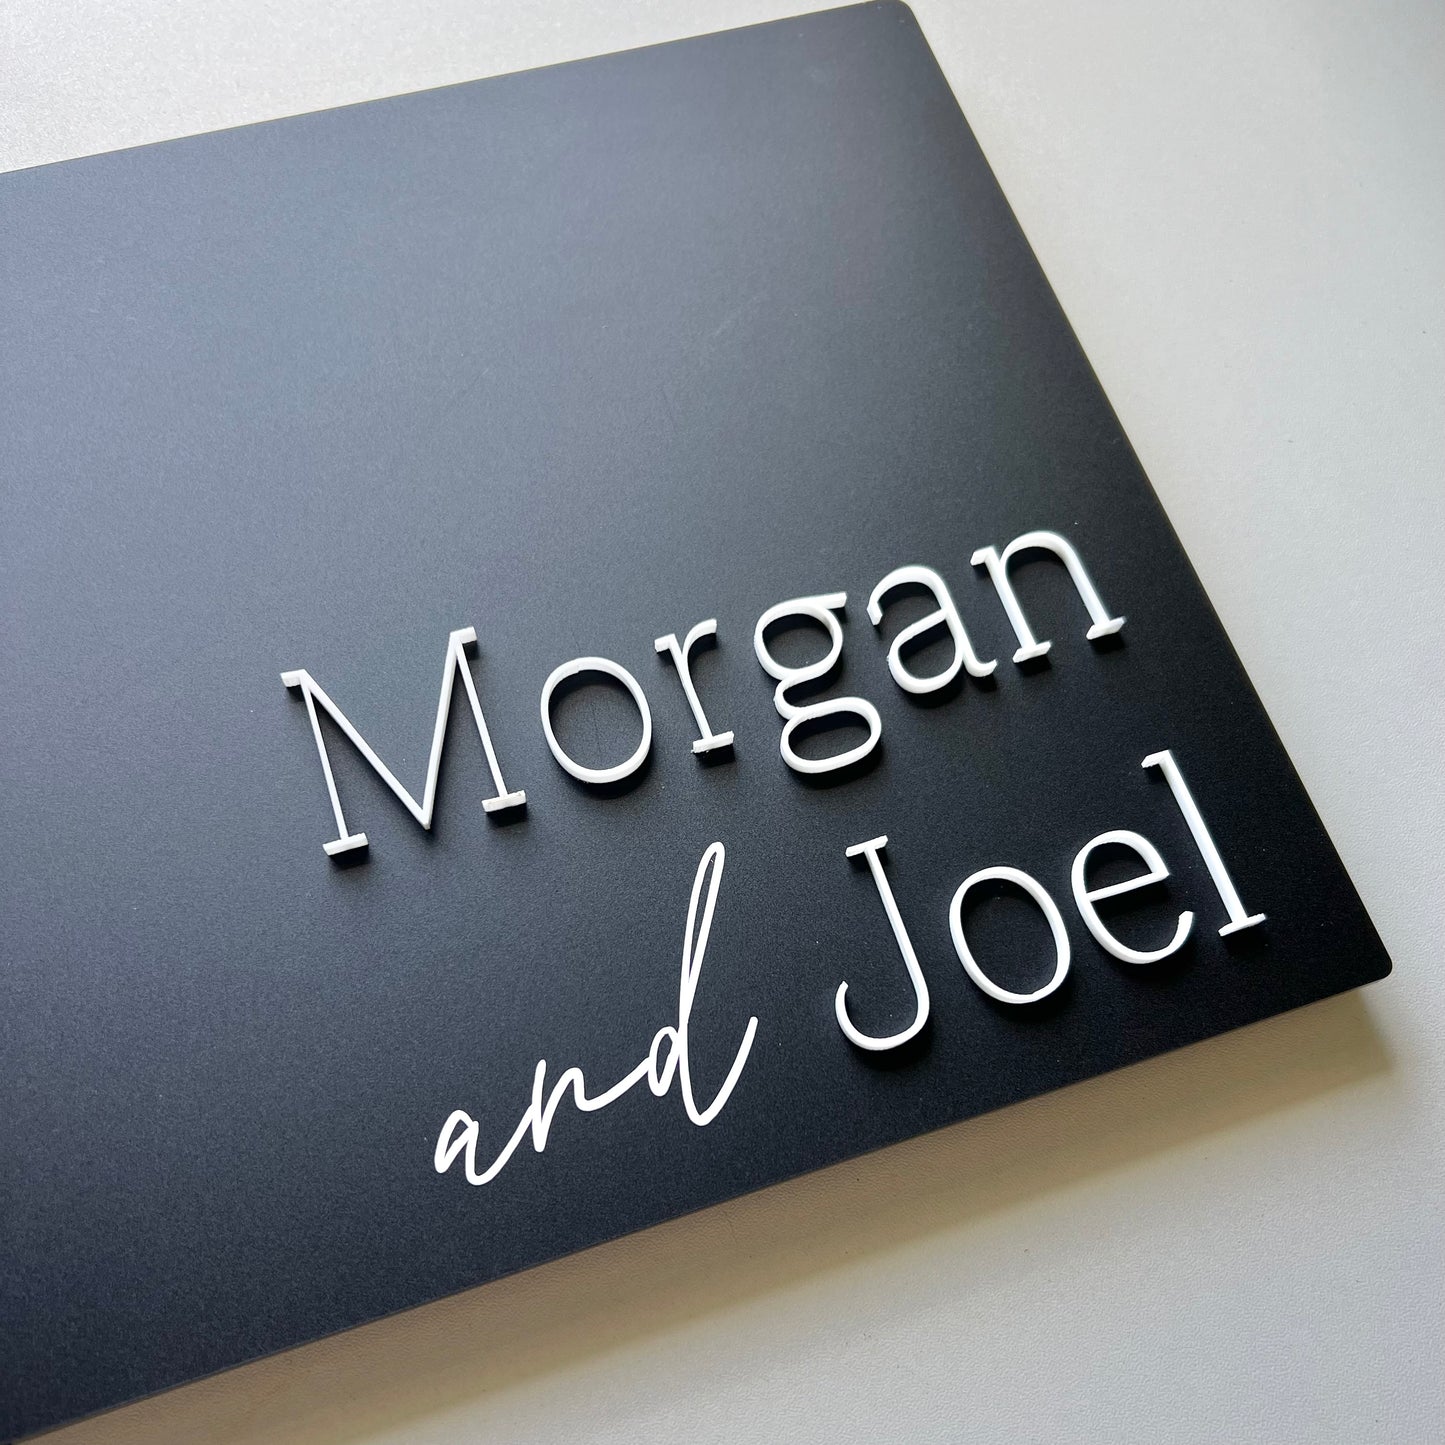 The Morgan guest book in acrylic